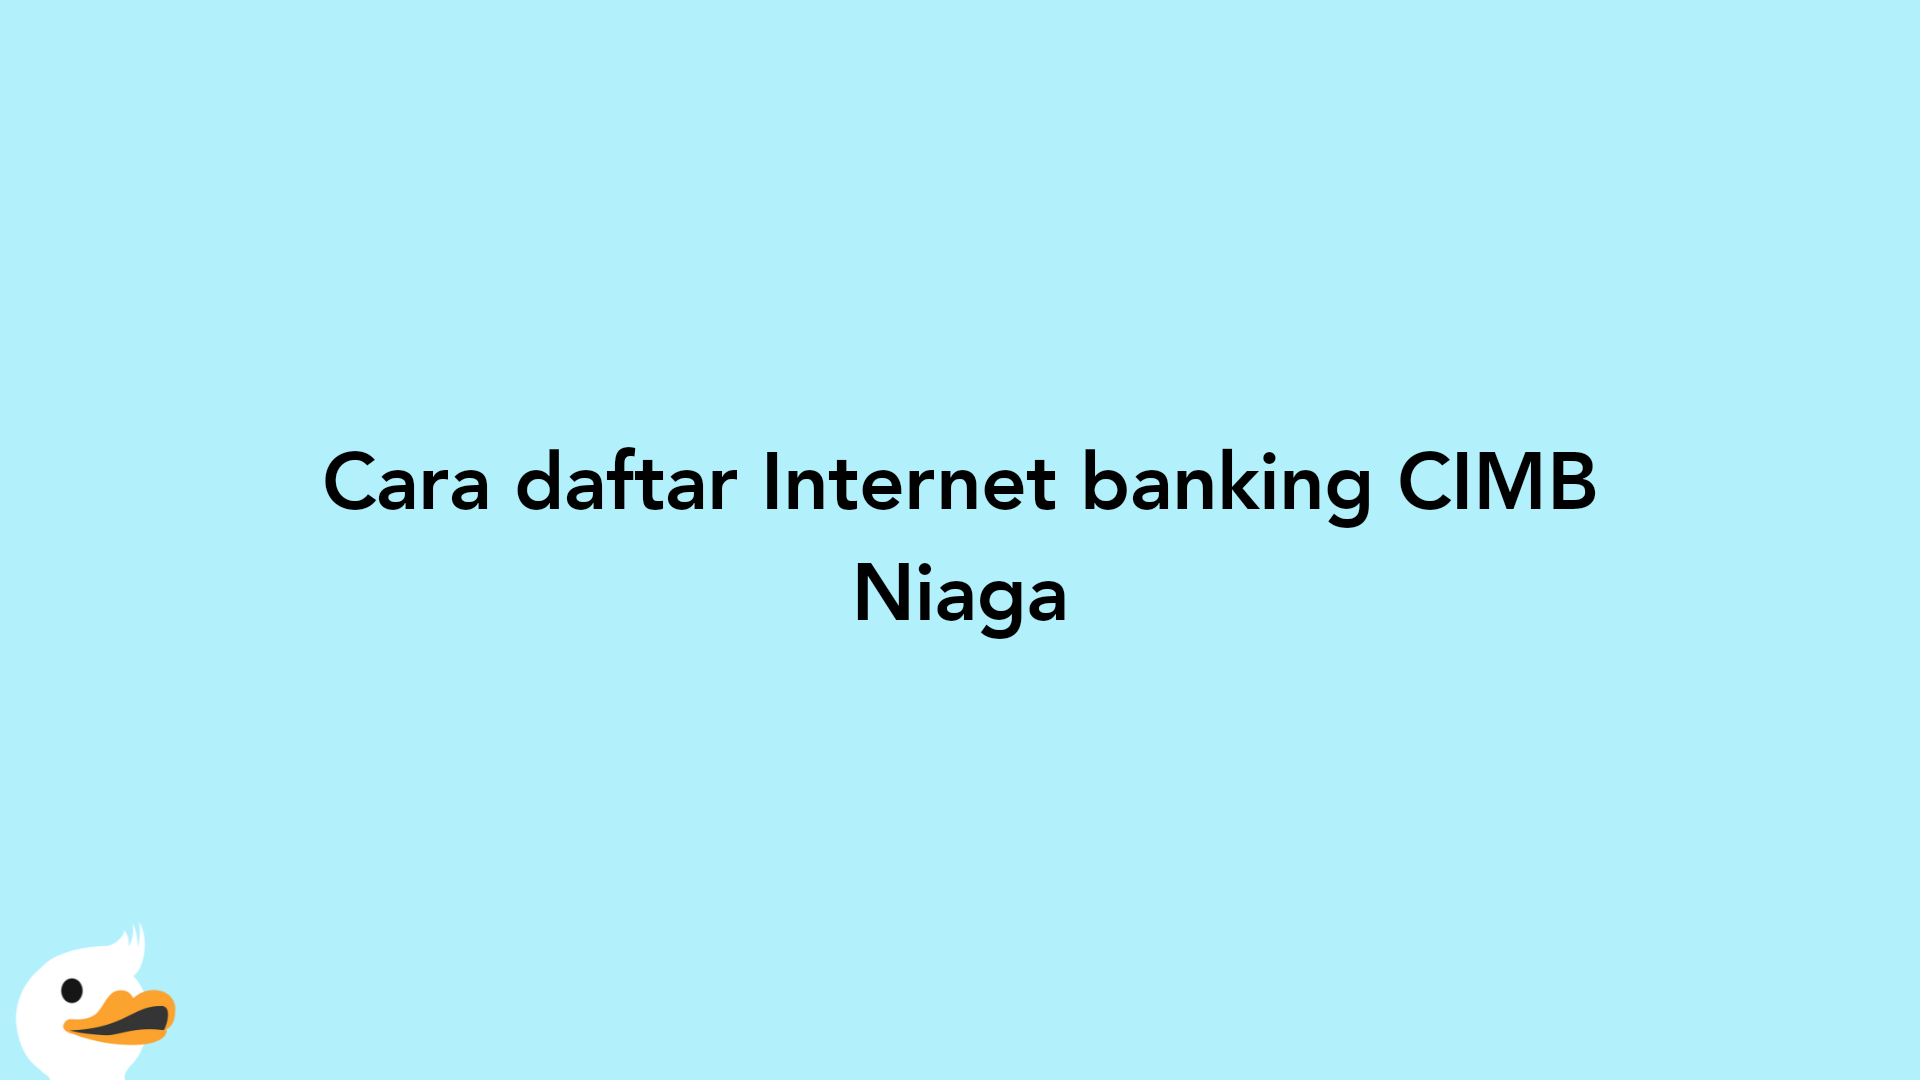 Cara daftar Internet banking CIMB Niaga